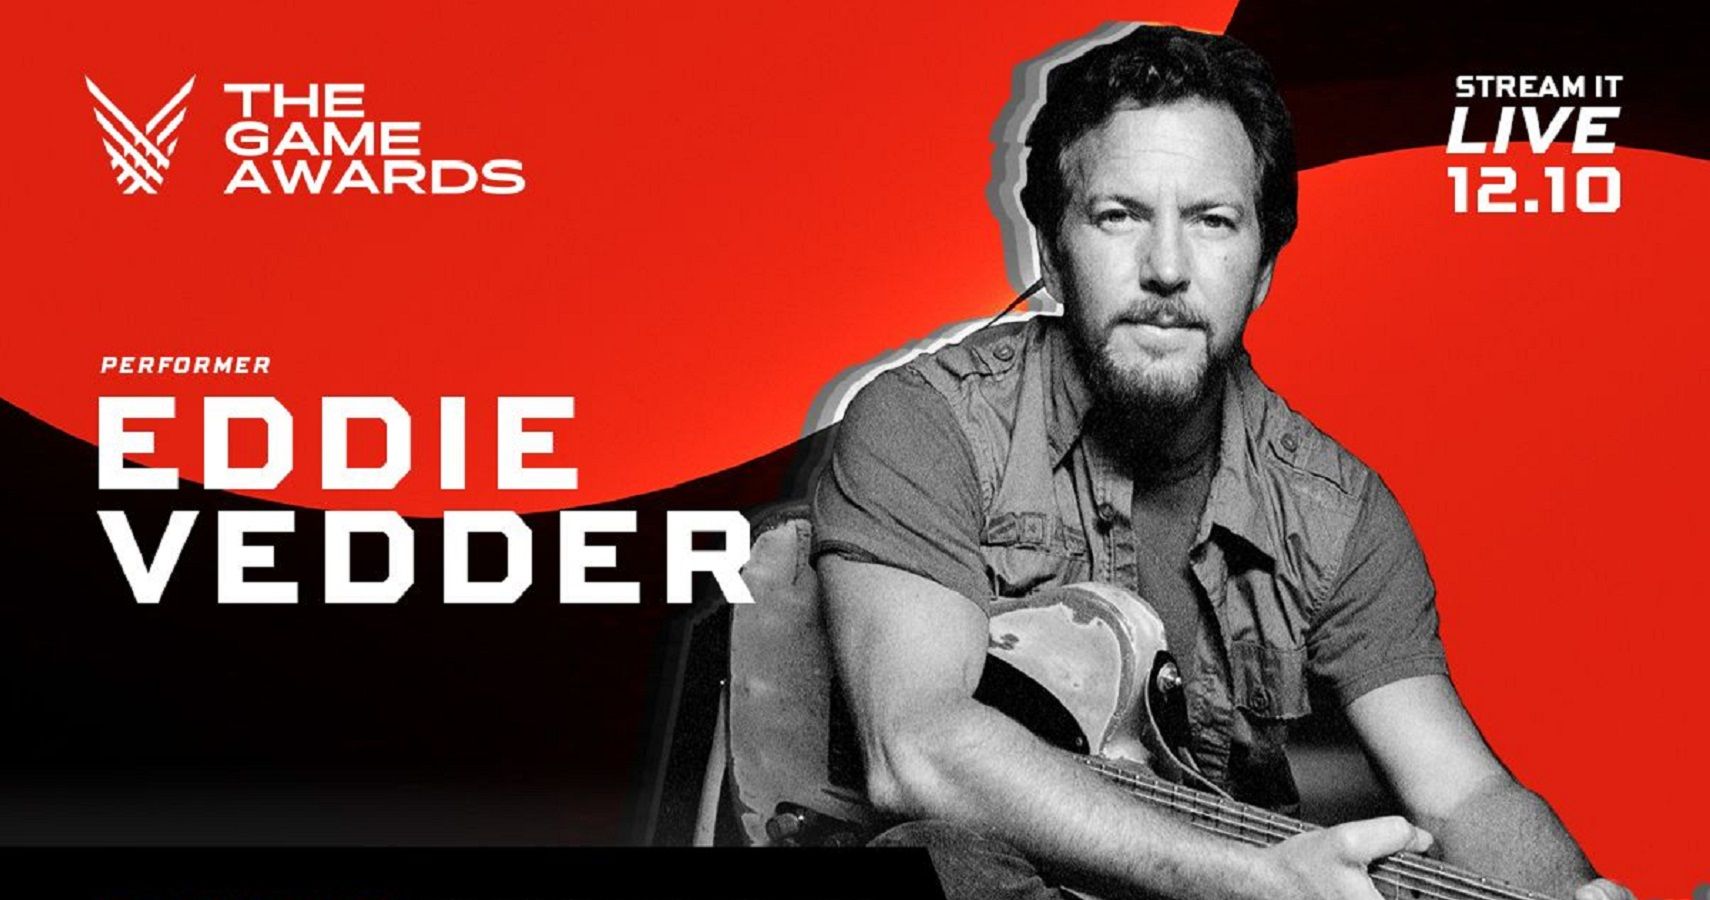 The Game Awards Eddie Vedder Performing Performance